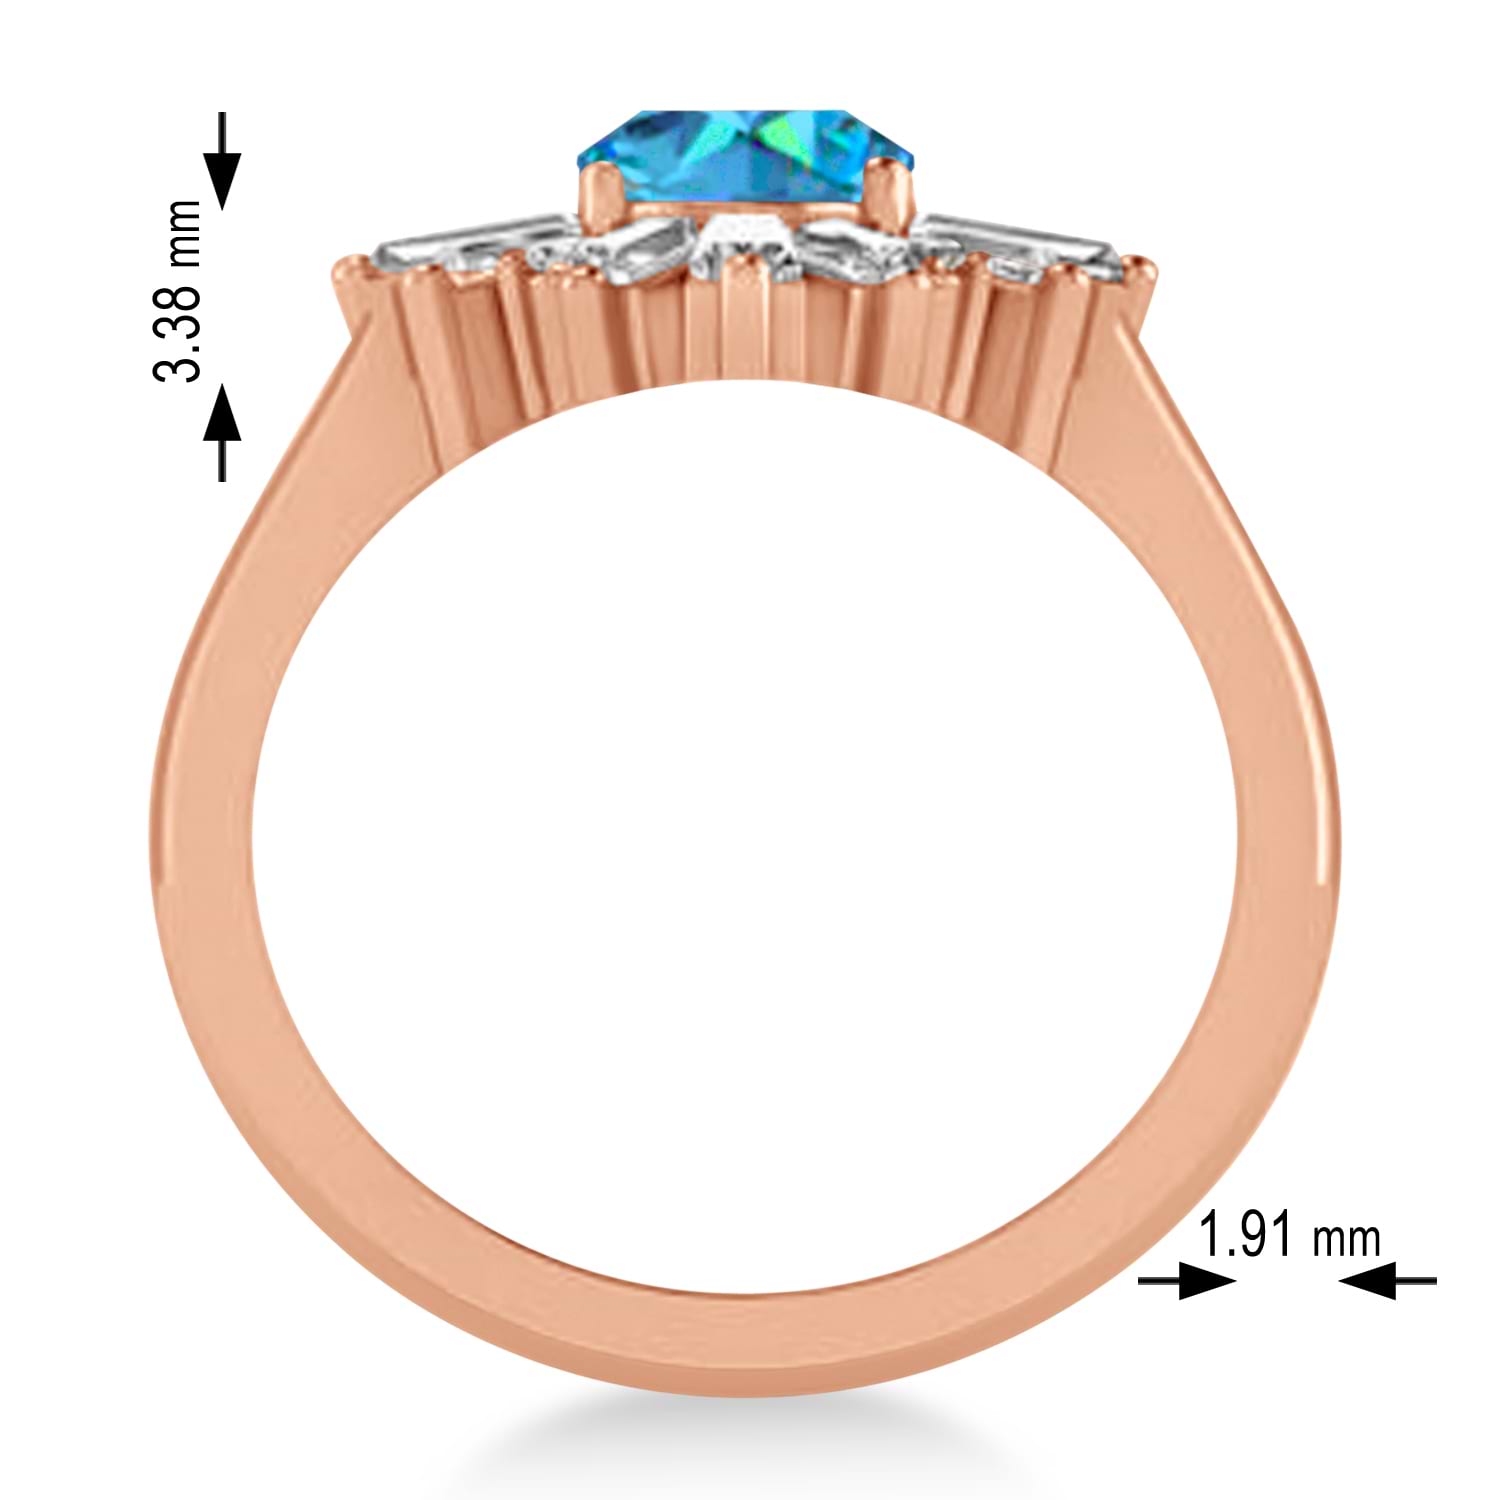 Blue Topaz & Diamond Oval Cut Ballerina Engagement Ring 18k Rose Gold (3.06 ctw)